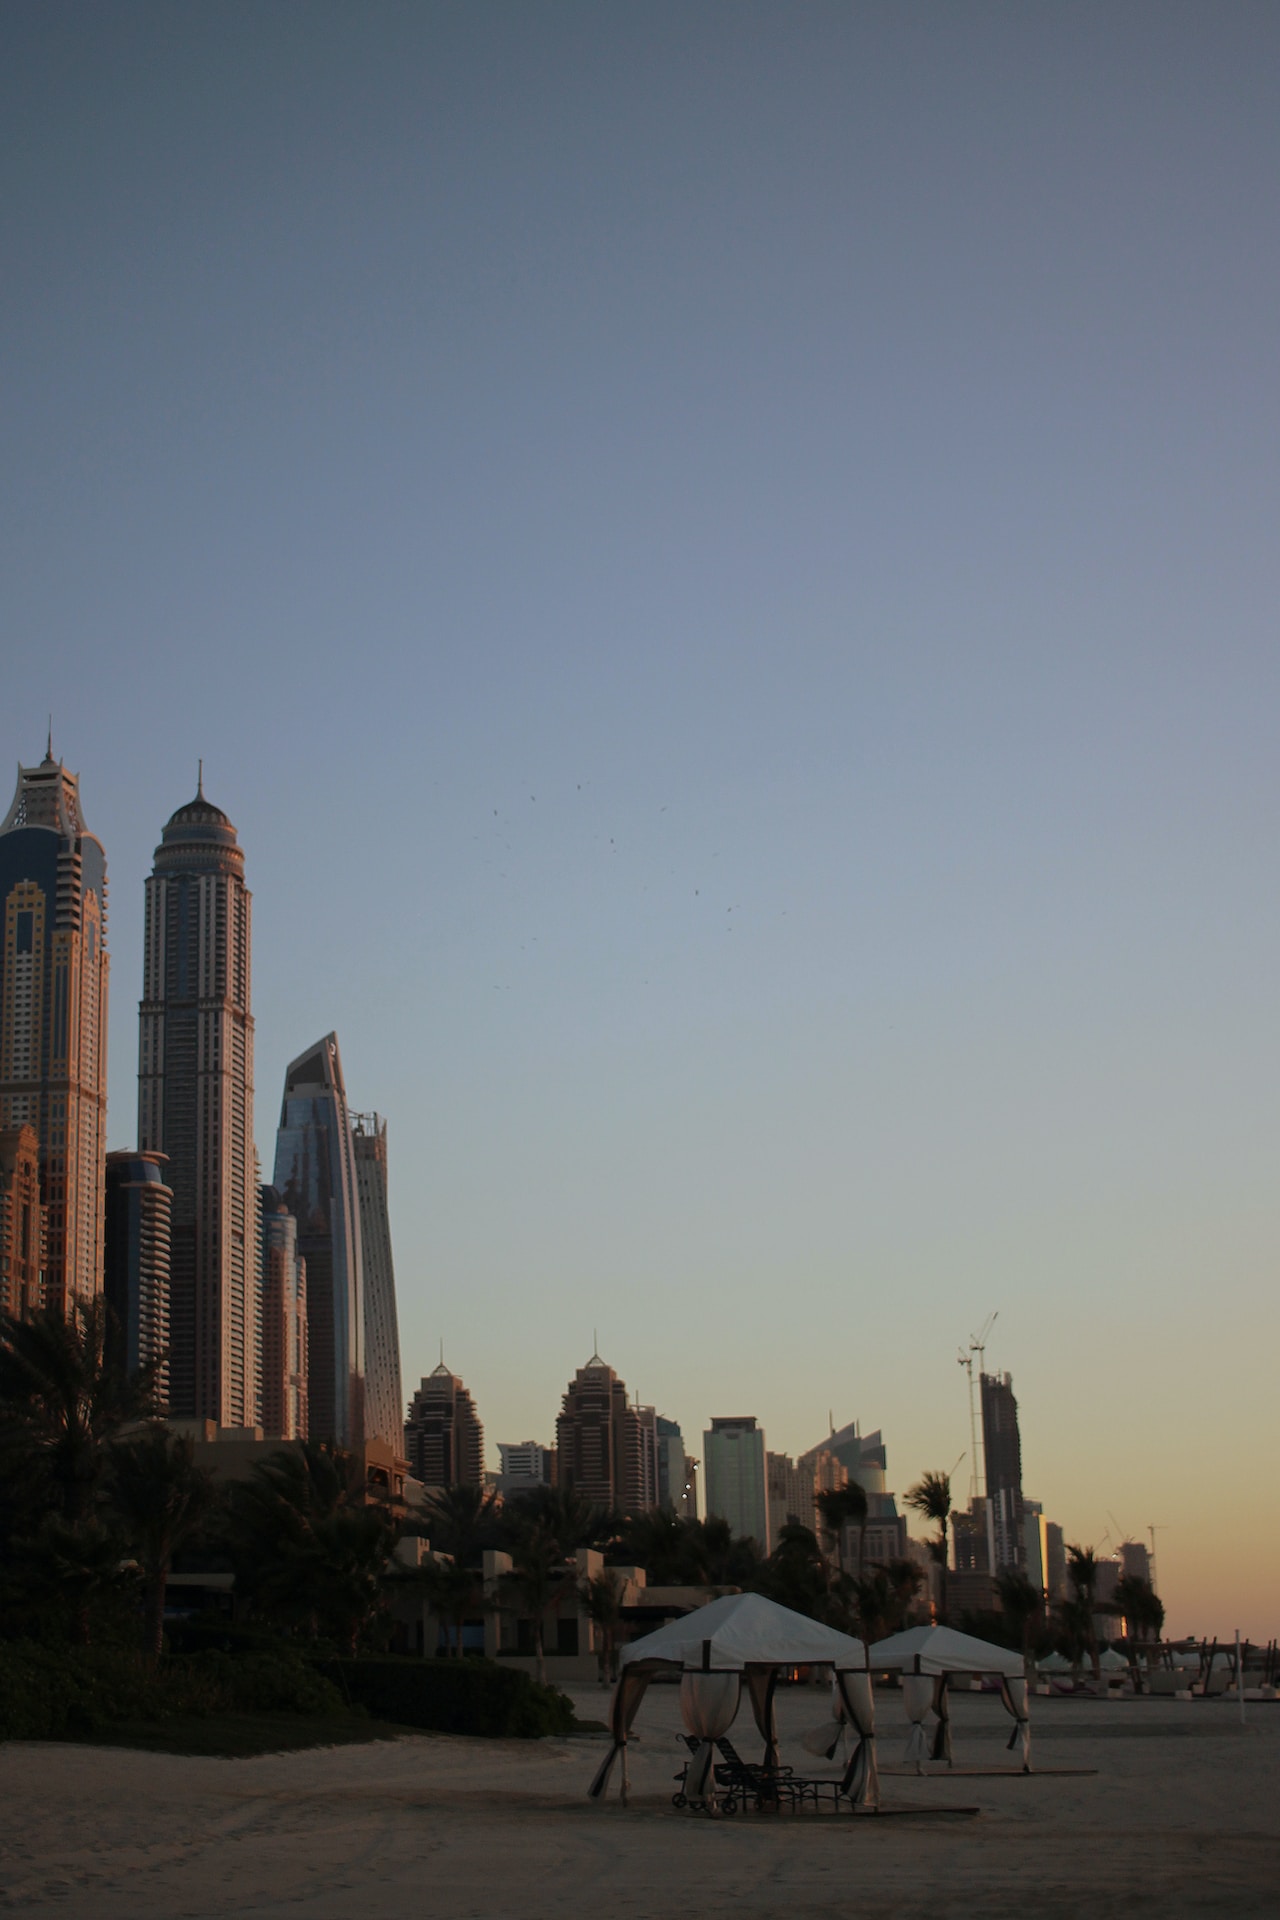 Is Burj Khalifa lake man made?